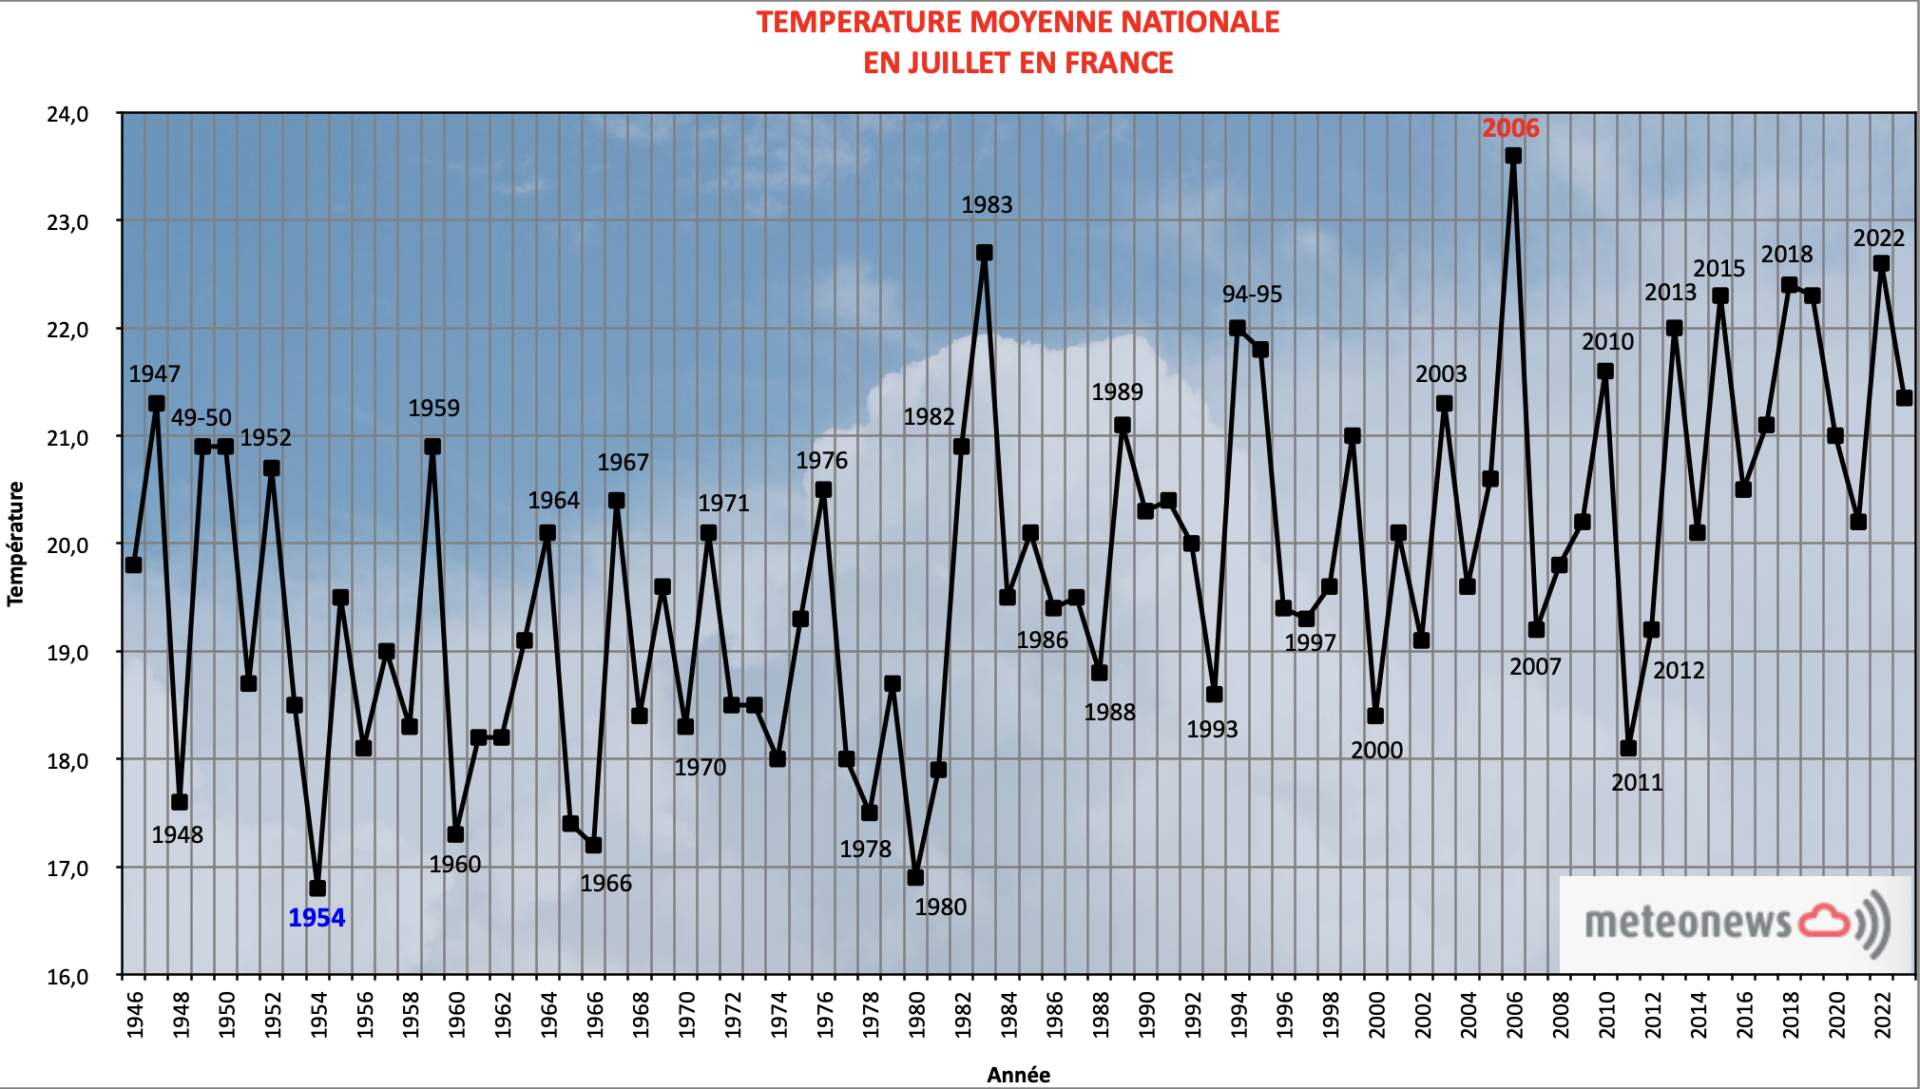 Température moyenne nationale en France en juillet; Source: MeteoNews